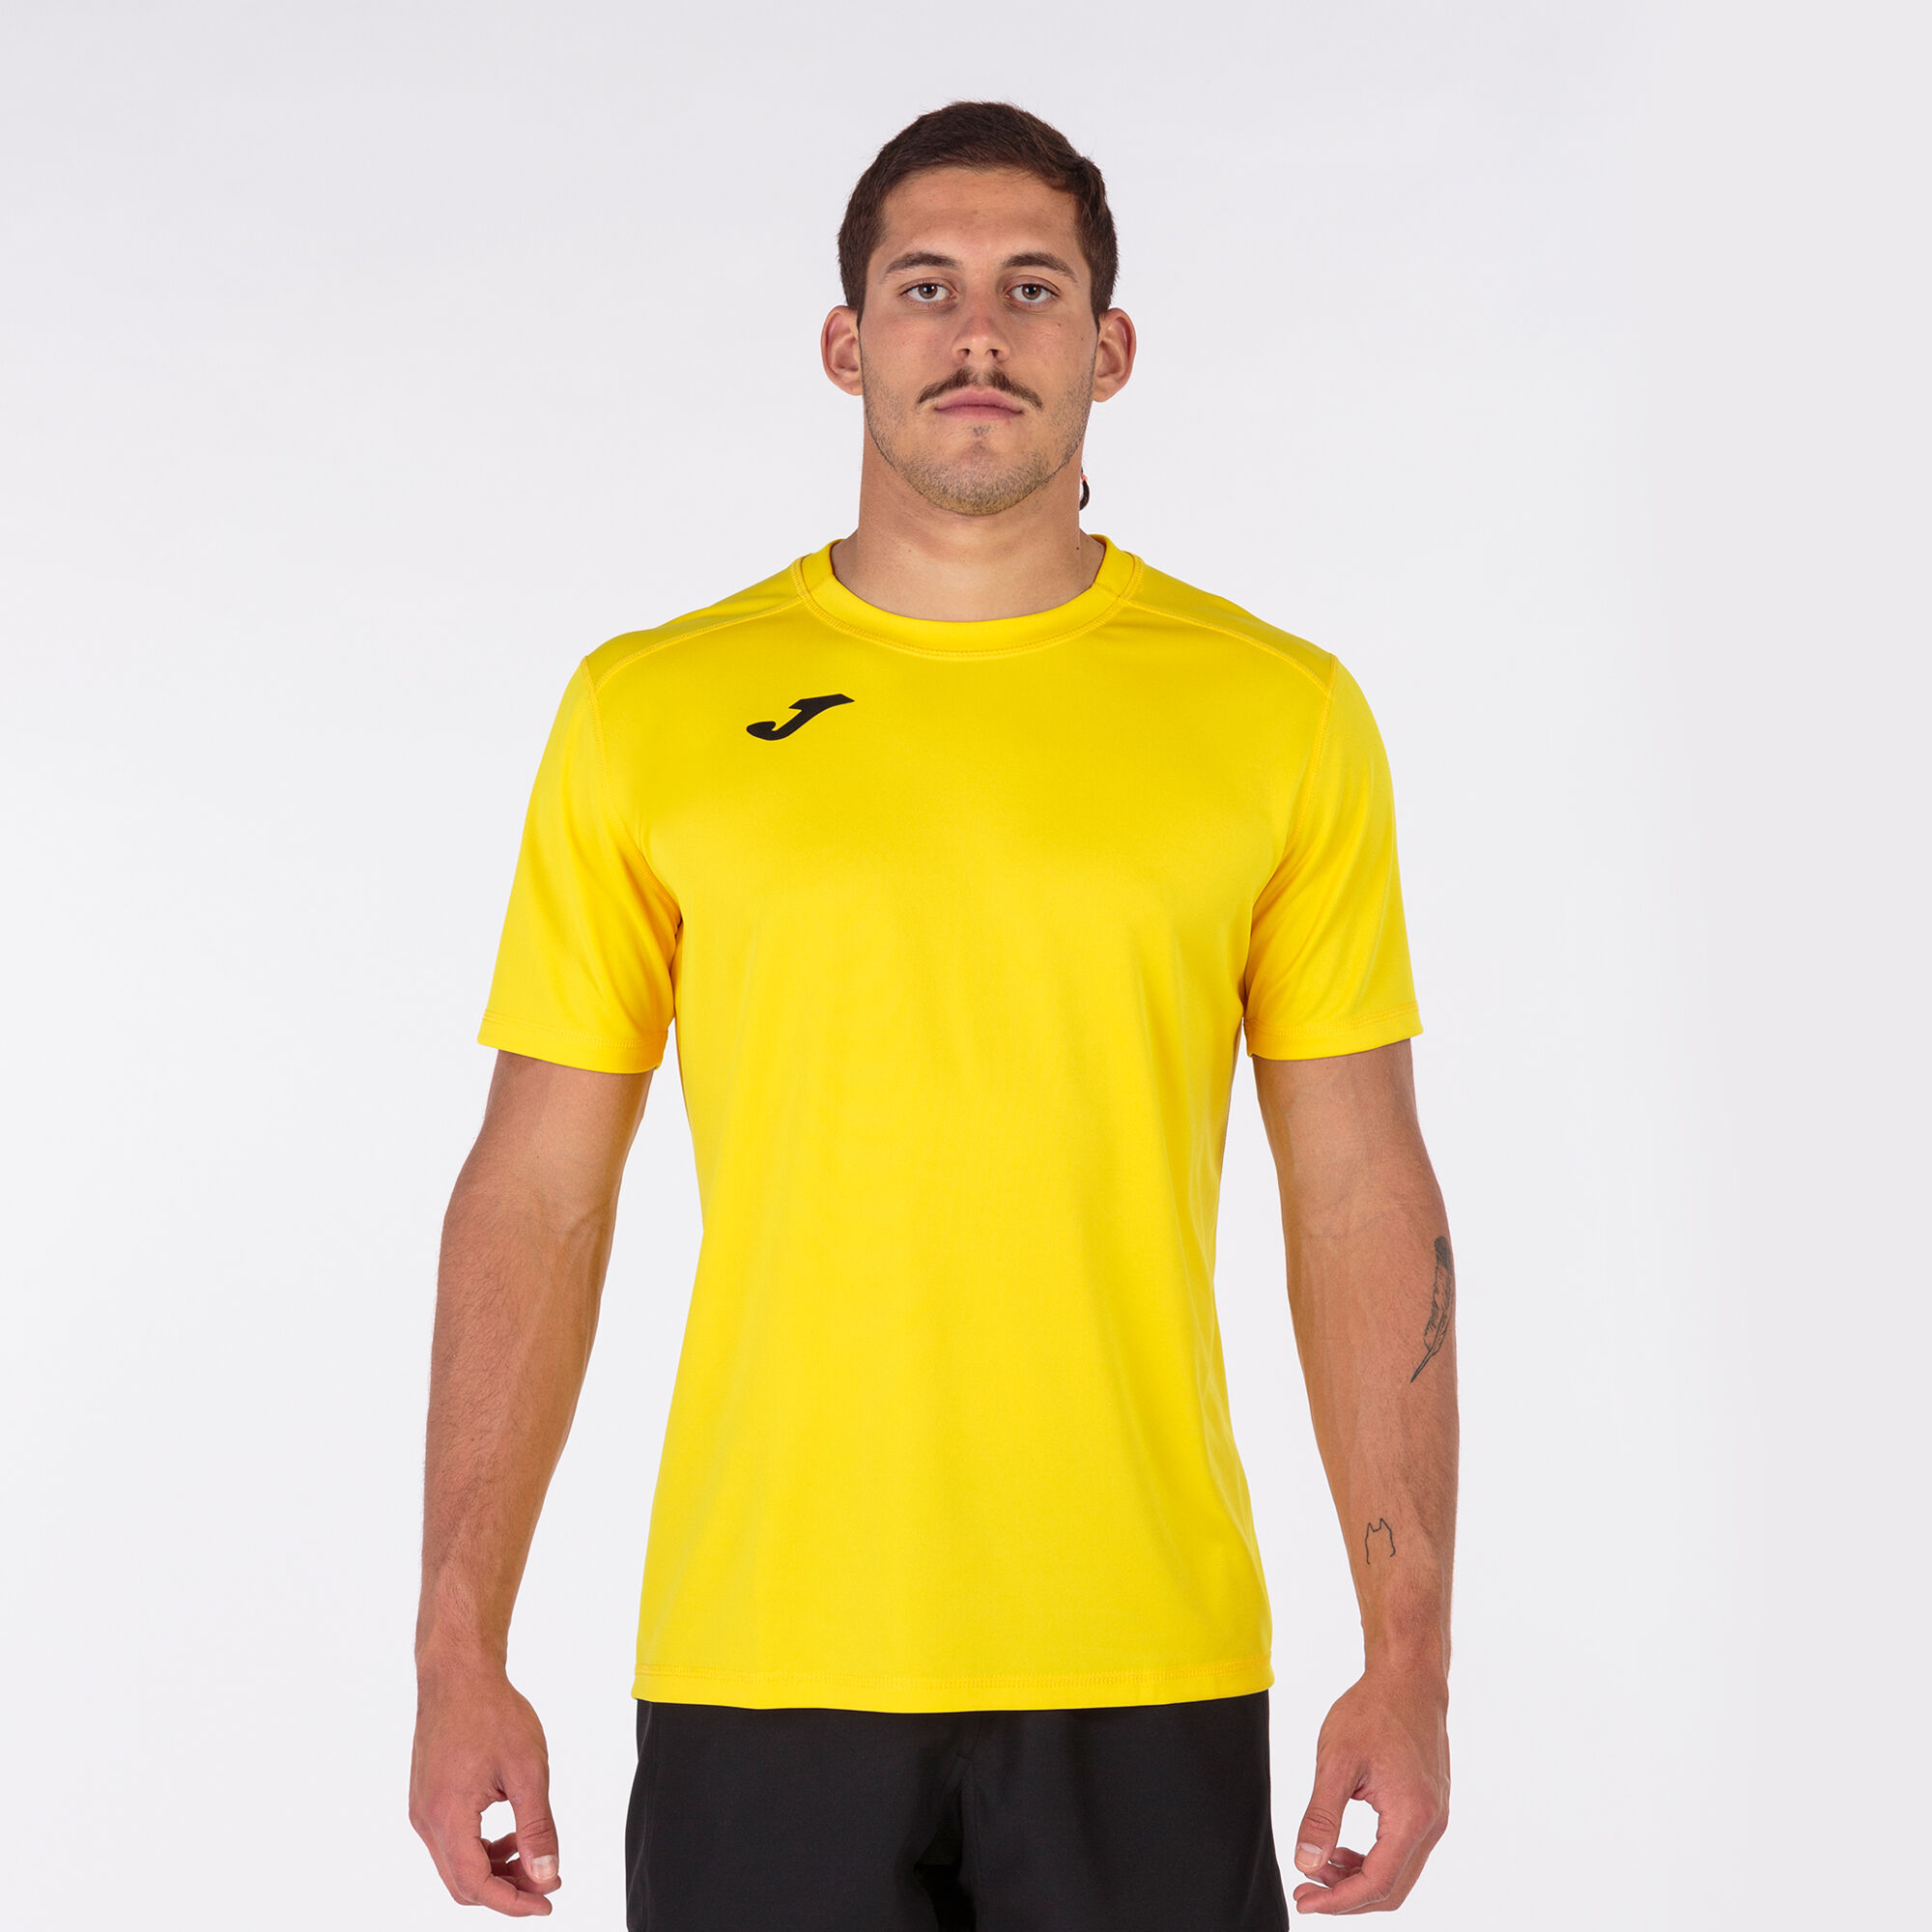 Camiseta manga corta hombre Strong amarillo